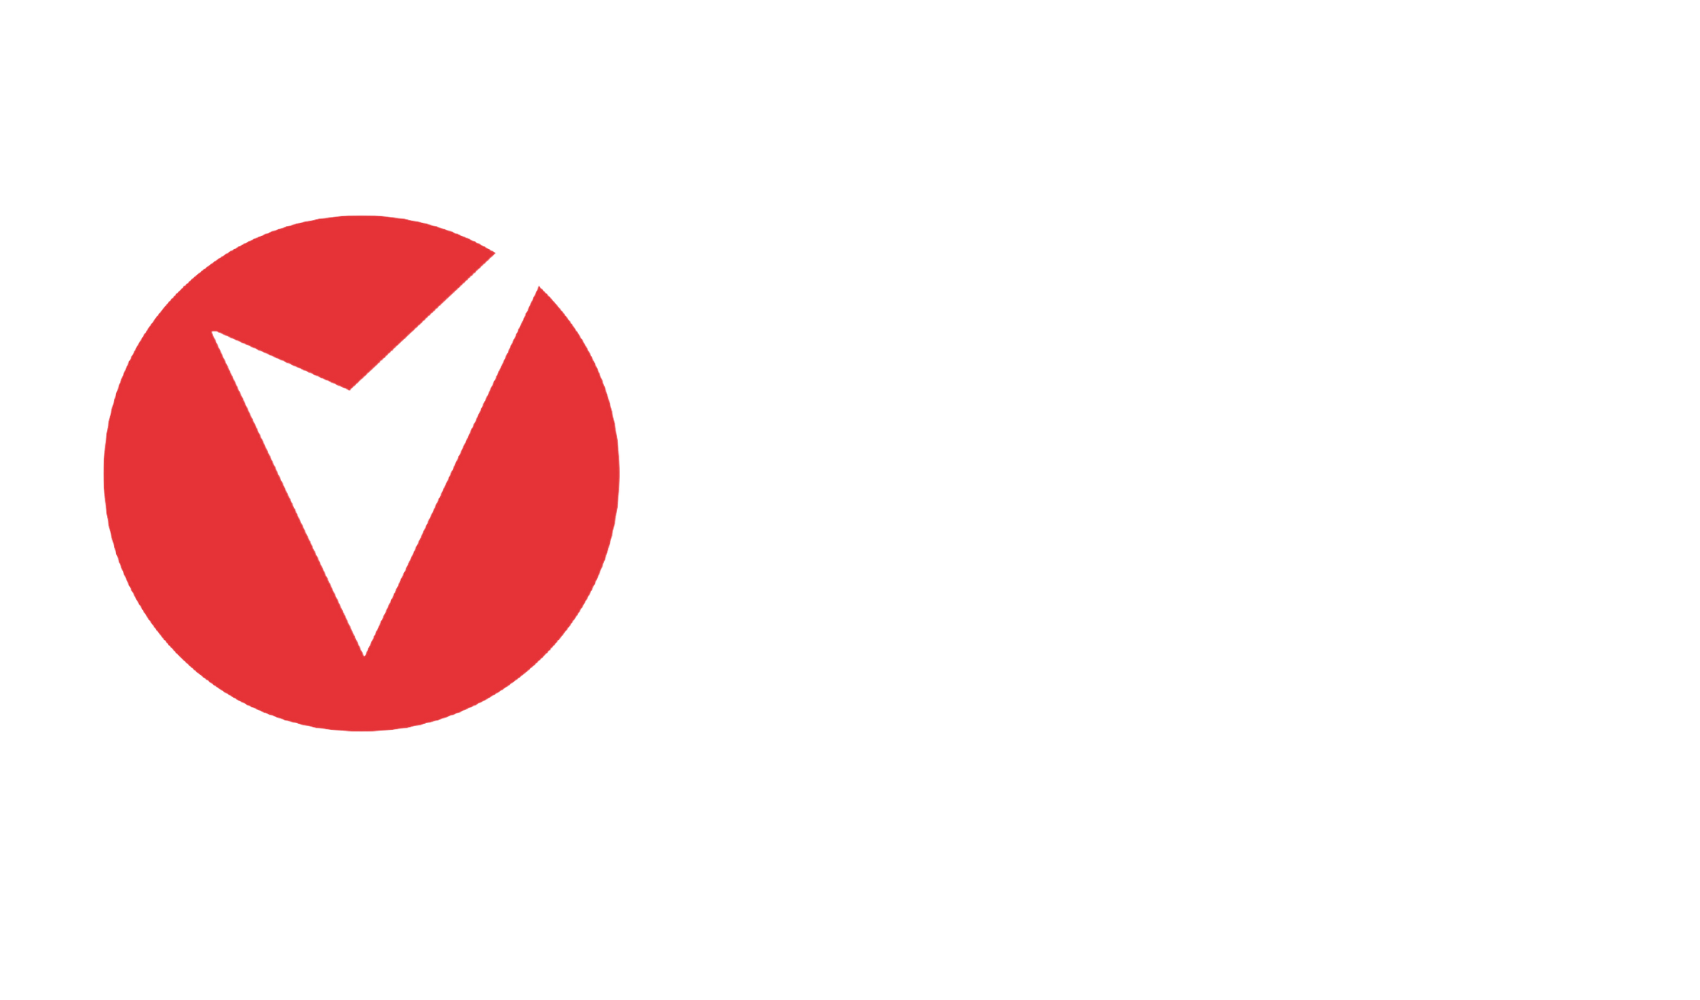 Verum Agency